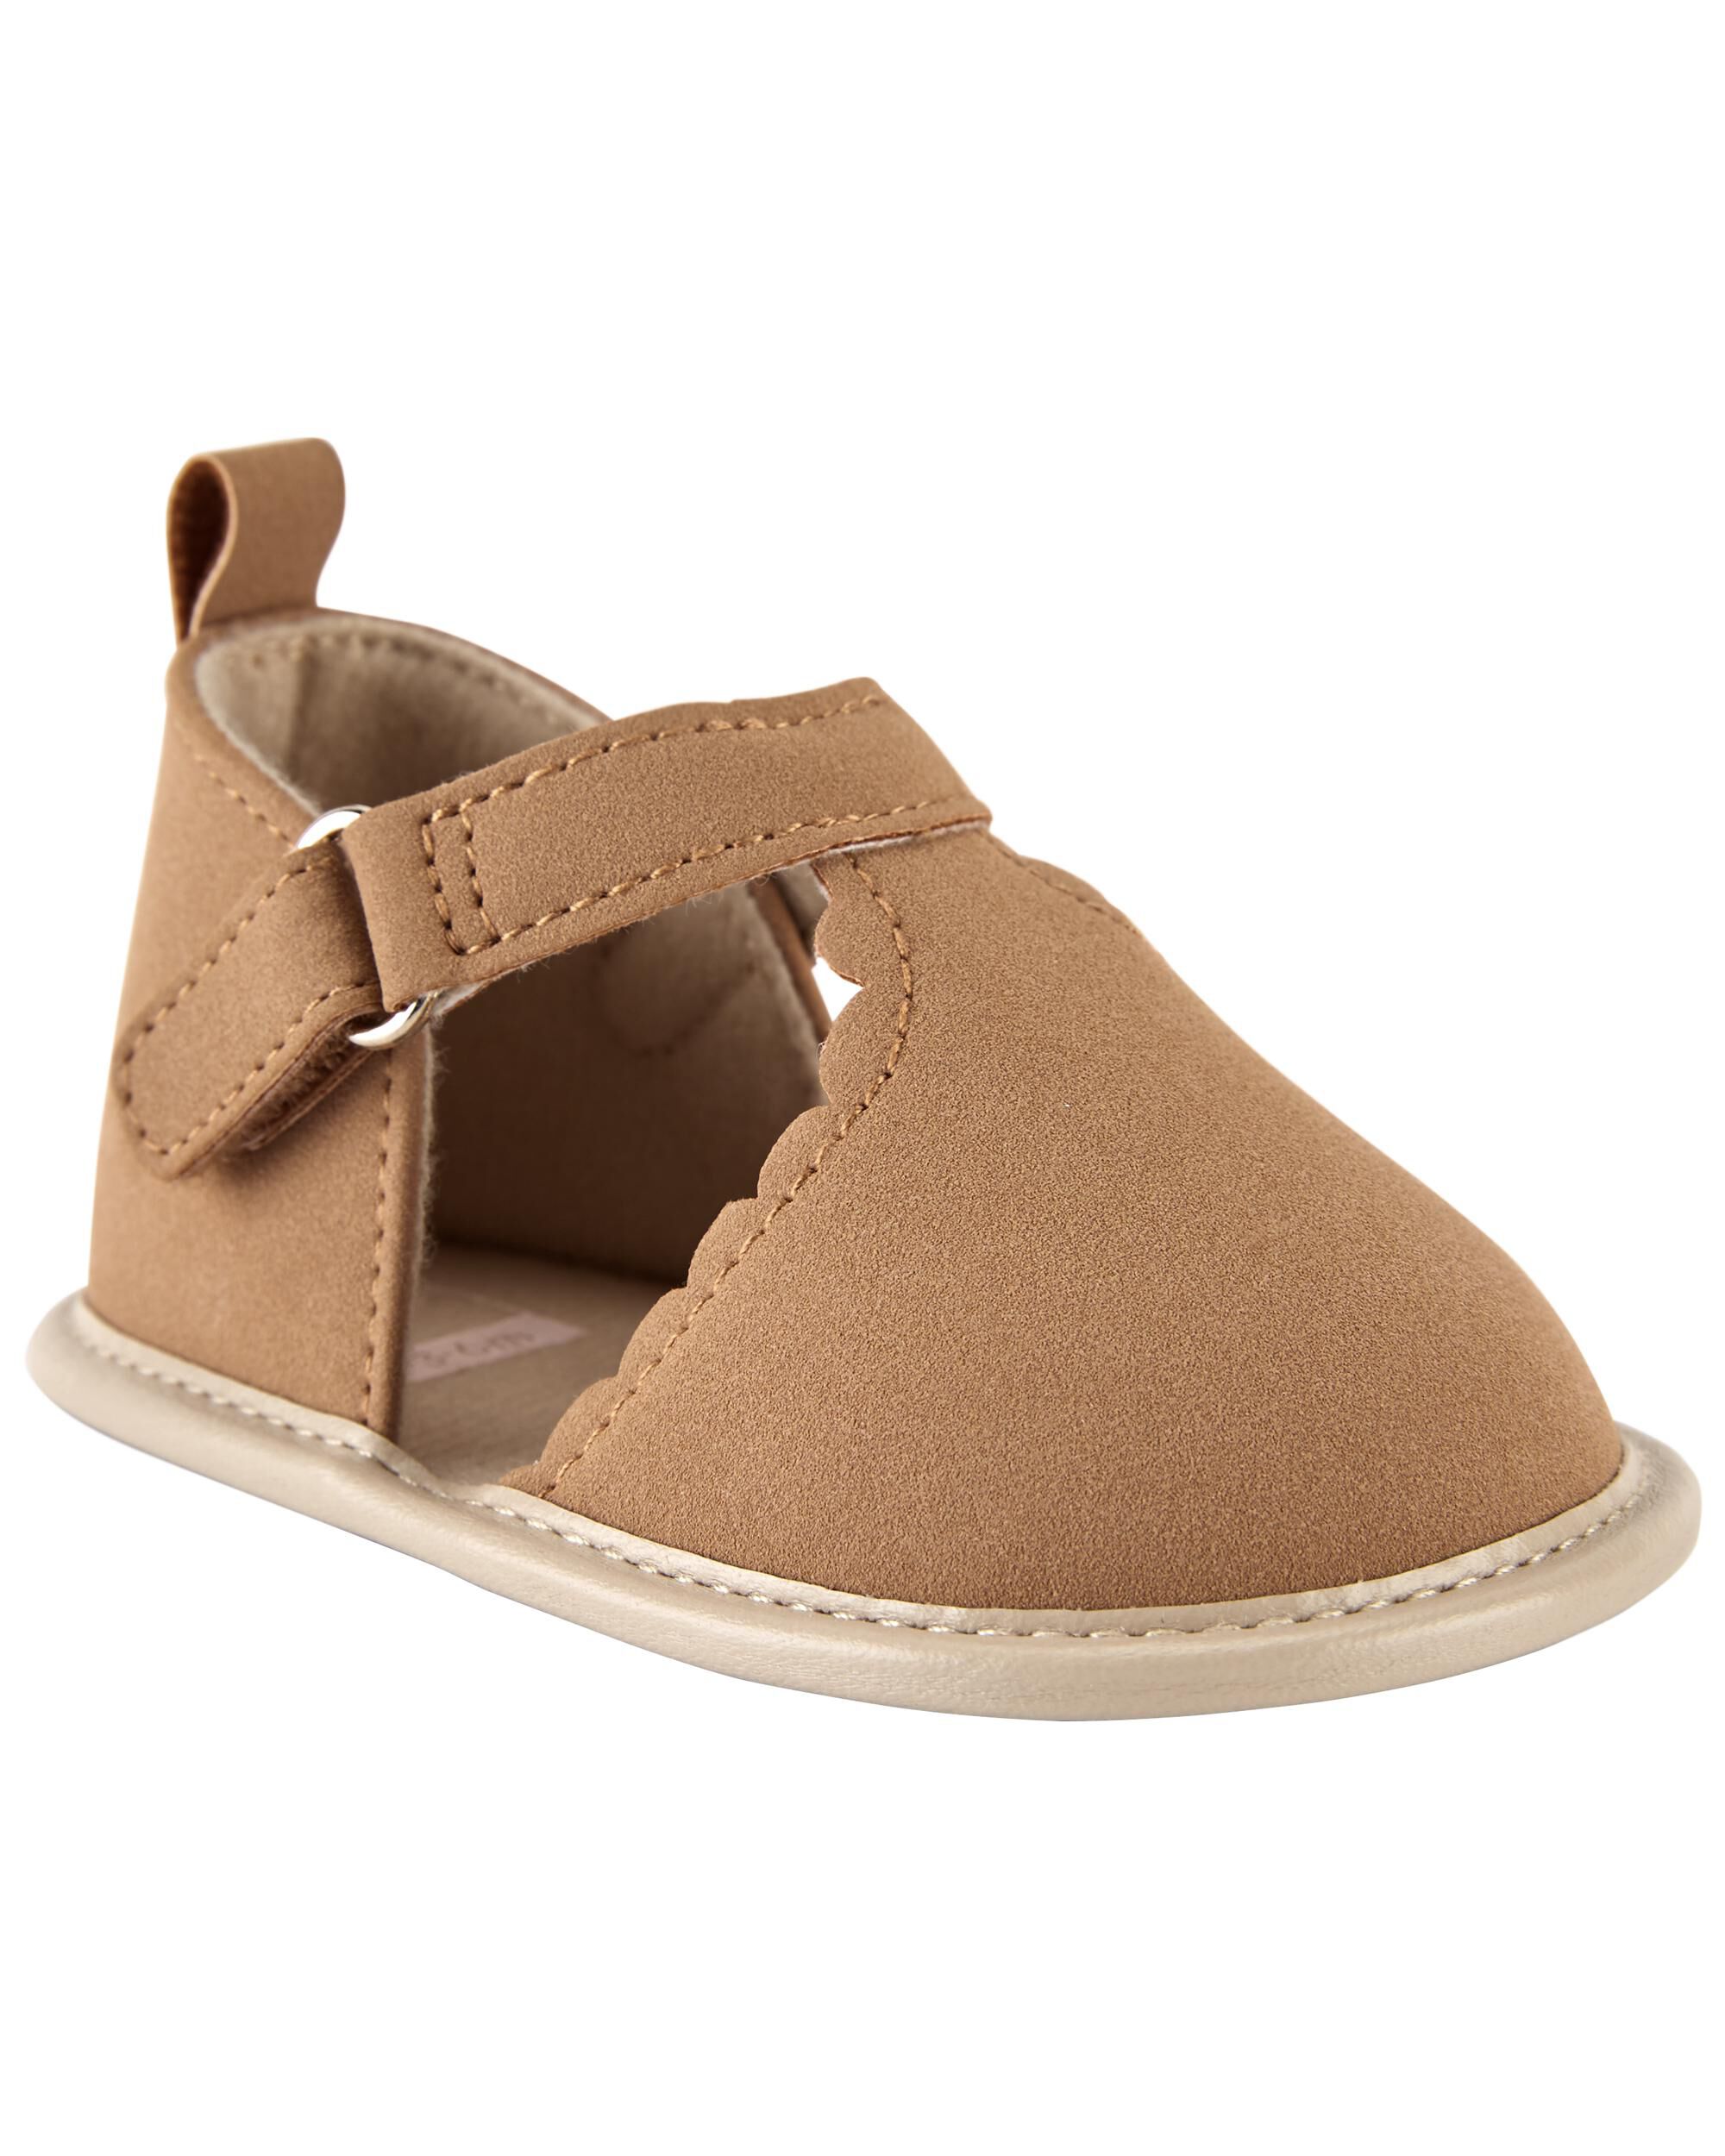 Boy Brown Criss Cross Sandal - Ethnic footwear for Kids – Tiber Taber Kids